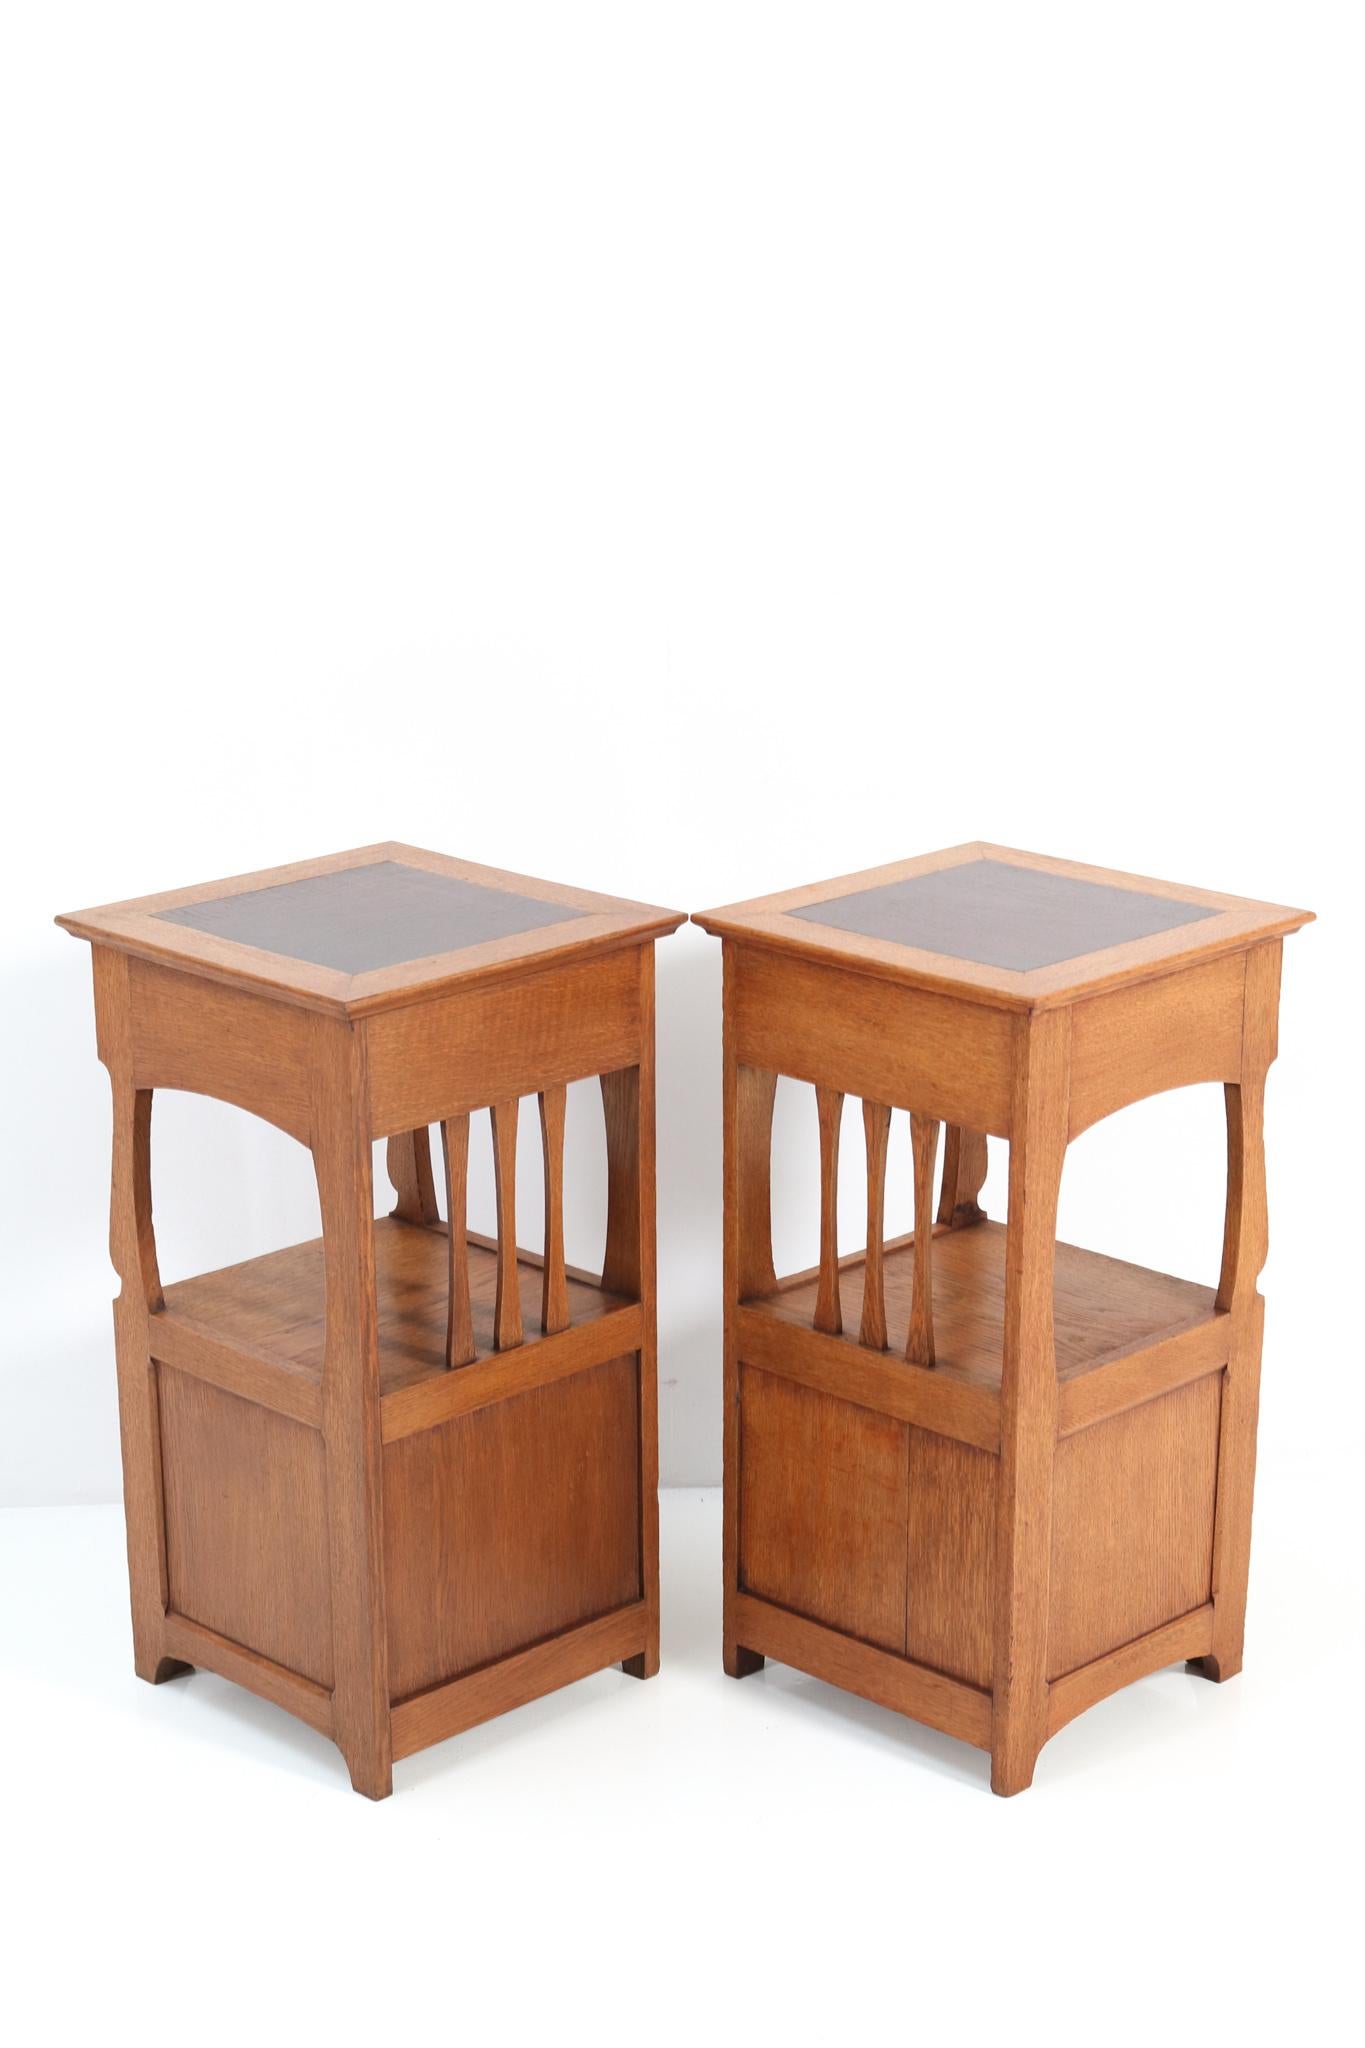 Two Oak Art Nouveau Arts & Crafts Nightstands or Bedside Tables, 1900s 2